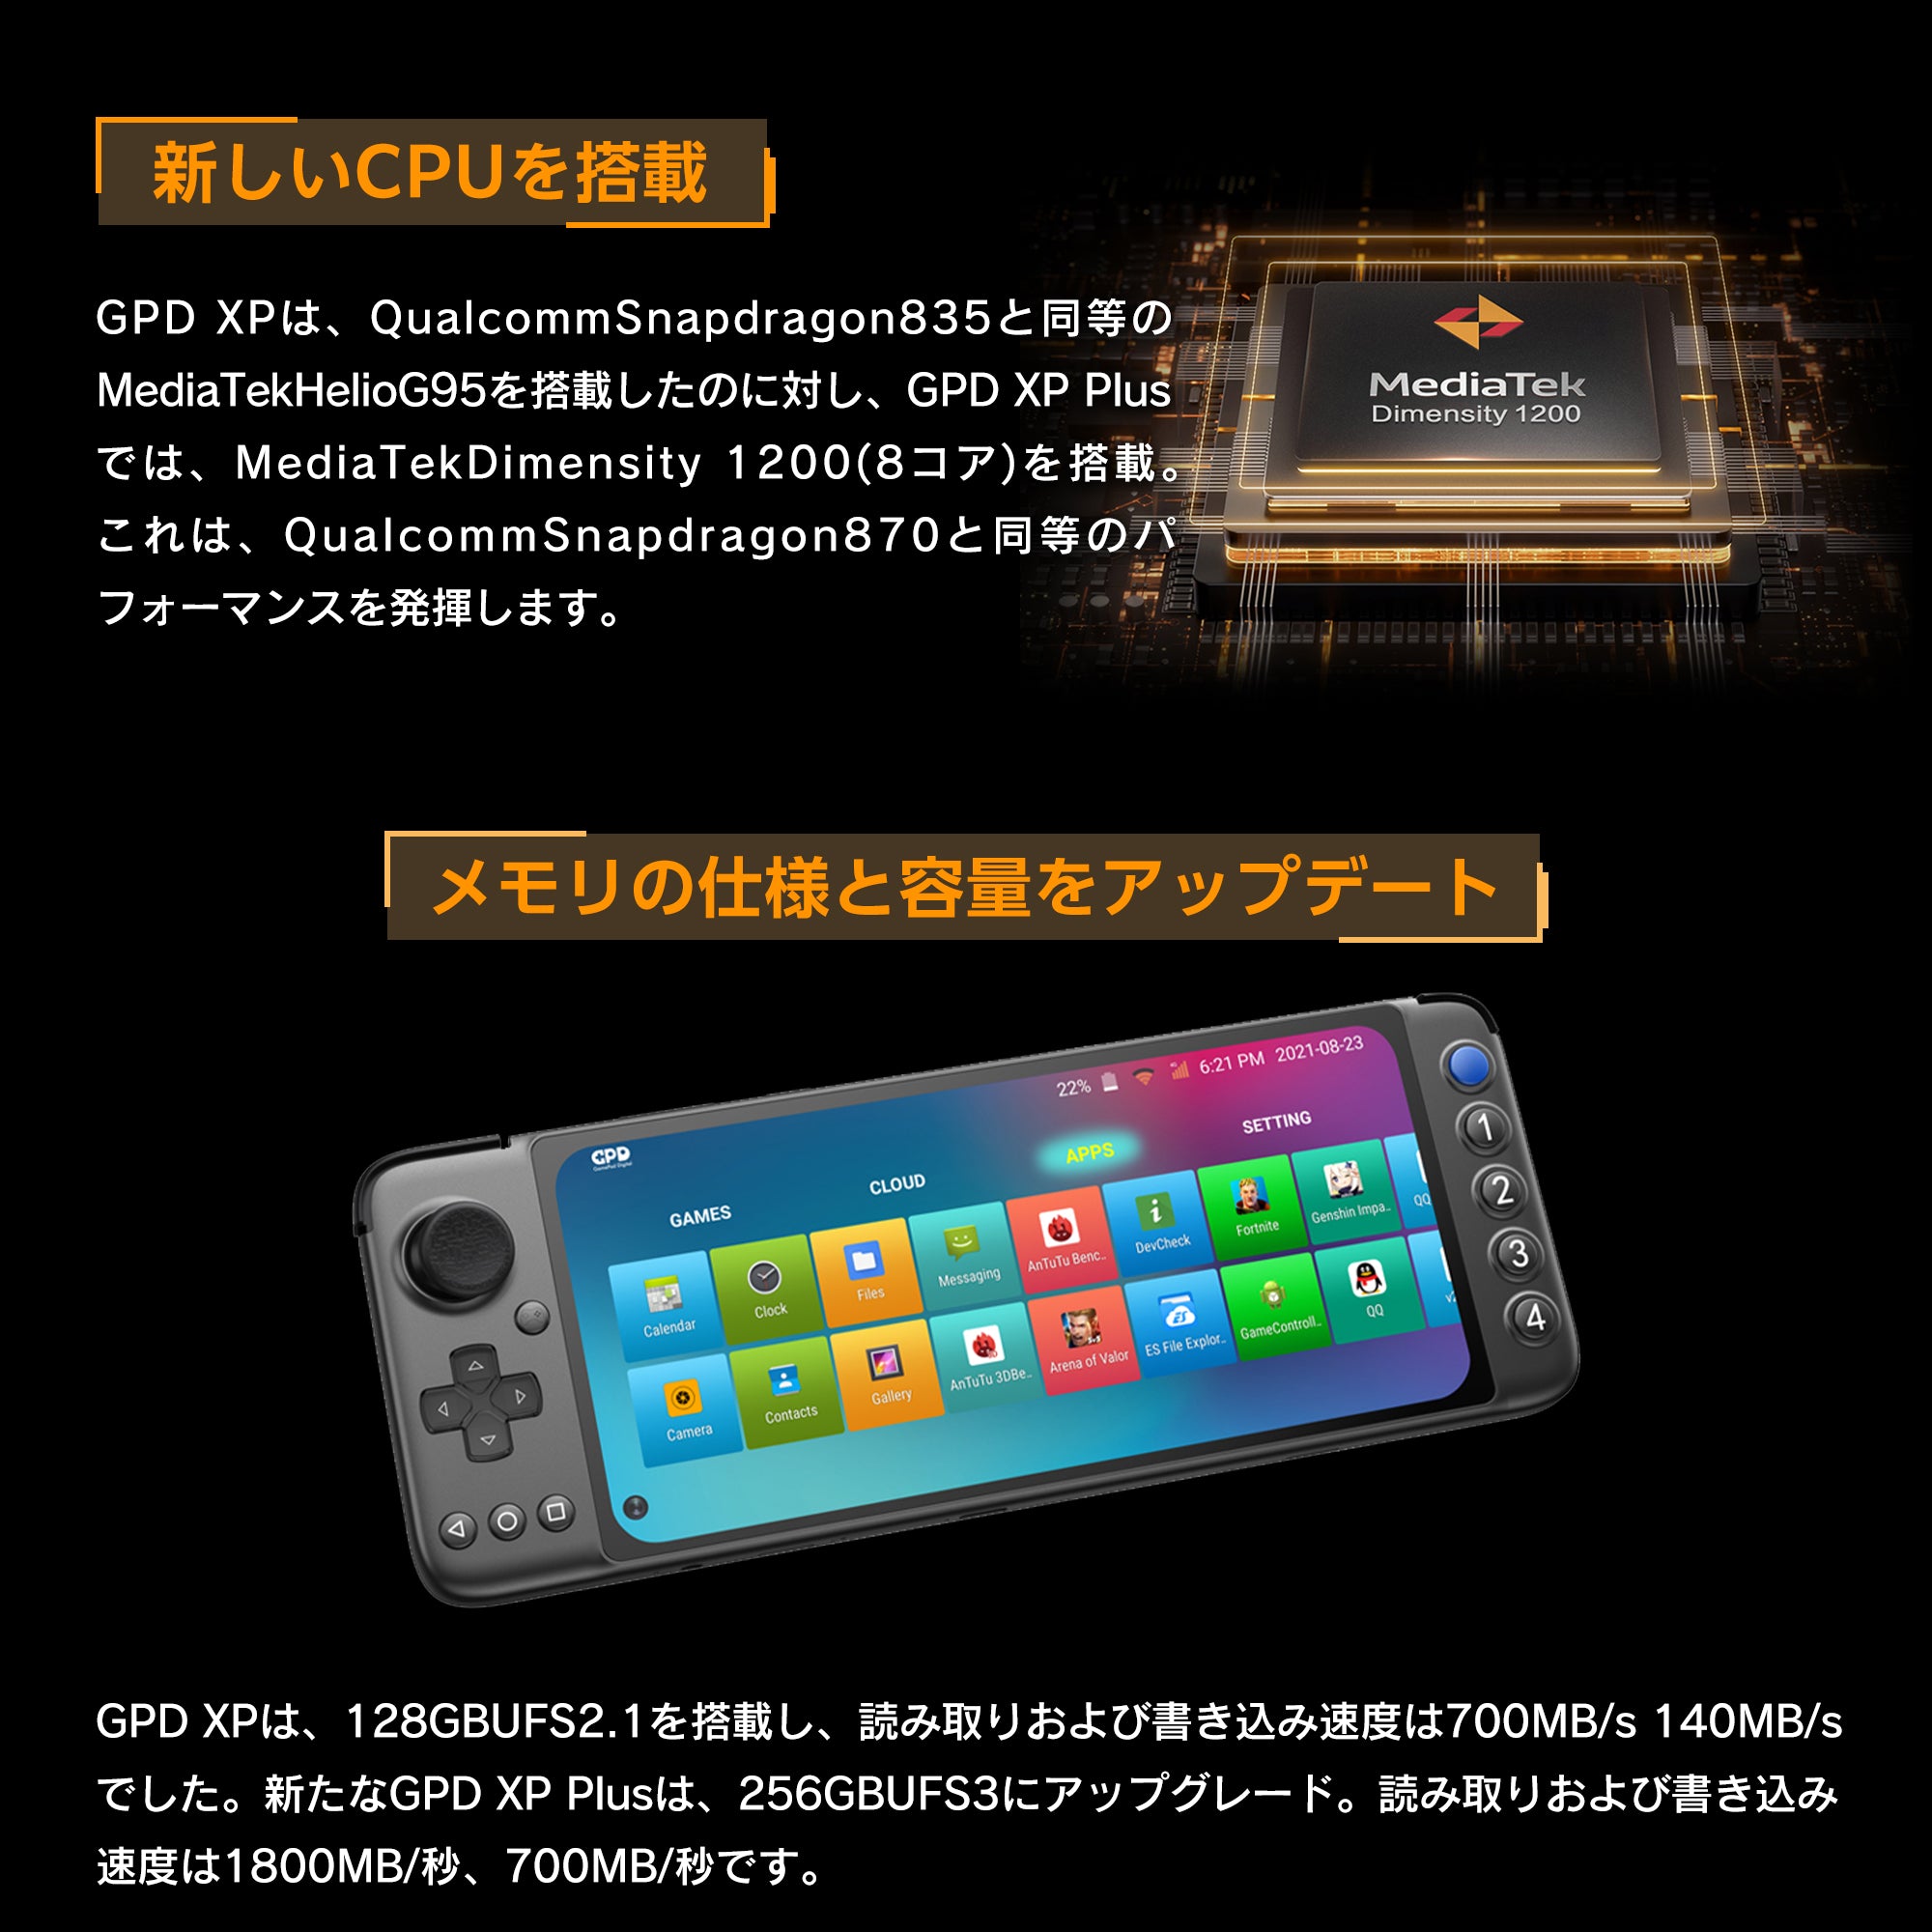 GPD XP PLUS 6GB+128GBモデル 美品 専用ケース付